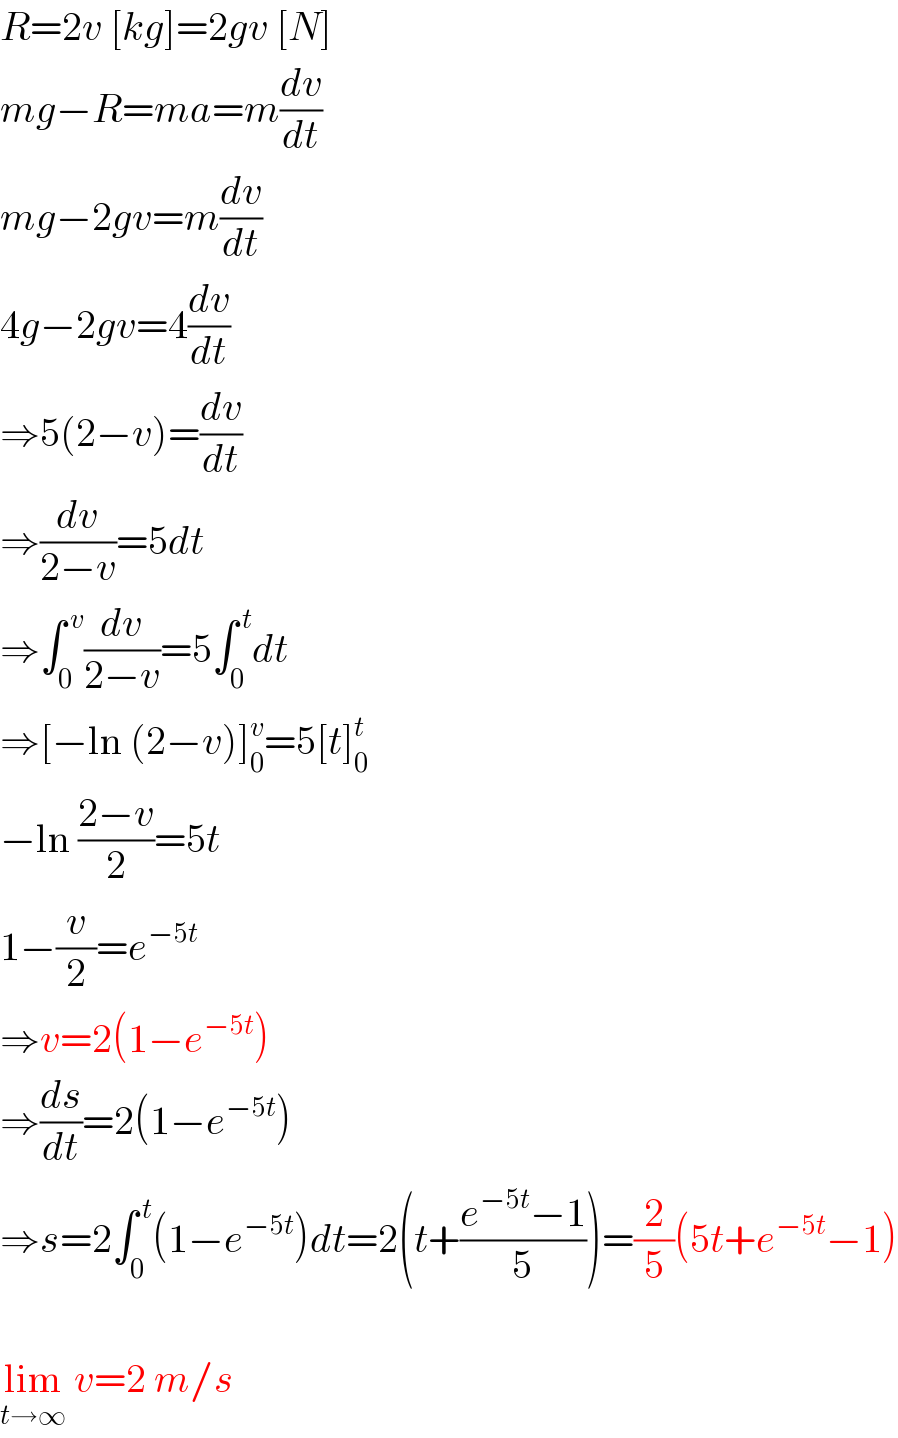 R=2v [kg]=2gv [N]  mg−R=ma=m(dv/dt)  mg−2gv=m(dv/dt)  4g−2gv=4(dv/dt)  ⇒5(2−v)=(dv/dt)  ⇒(dv/(2−v))=5dt  ⇒∫_0 ^( v) (dv/(2−v))=5∫_0 ^( t) dt  ⇒[−ln (2−v)]_0 ^v =5[t]_0 ^t   −ln ((2−v)/2)=5t  1−(v/2)=e^(−5t)   ⇒v=2(1−e^(−5t) )  ⇒(ds/dt)=2(1−e^(−5t) )  ⇒s=2∫_0 ^( t) (1−e^(−5t) )dt=2(t+((e^(−5t) −1)/5))=(2/5)(5t+e^(−5t) −1)    lim_(t→∞)  v=2 m/s  